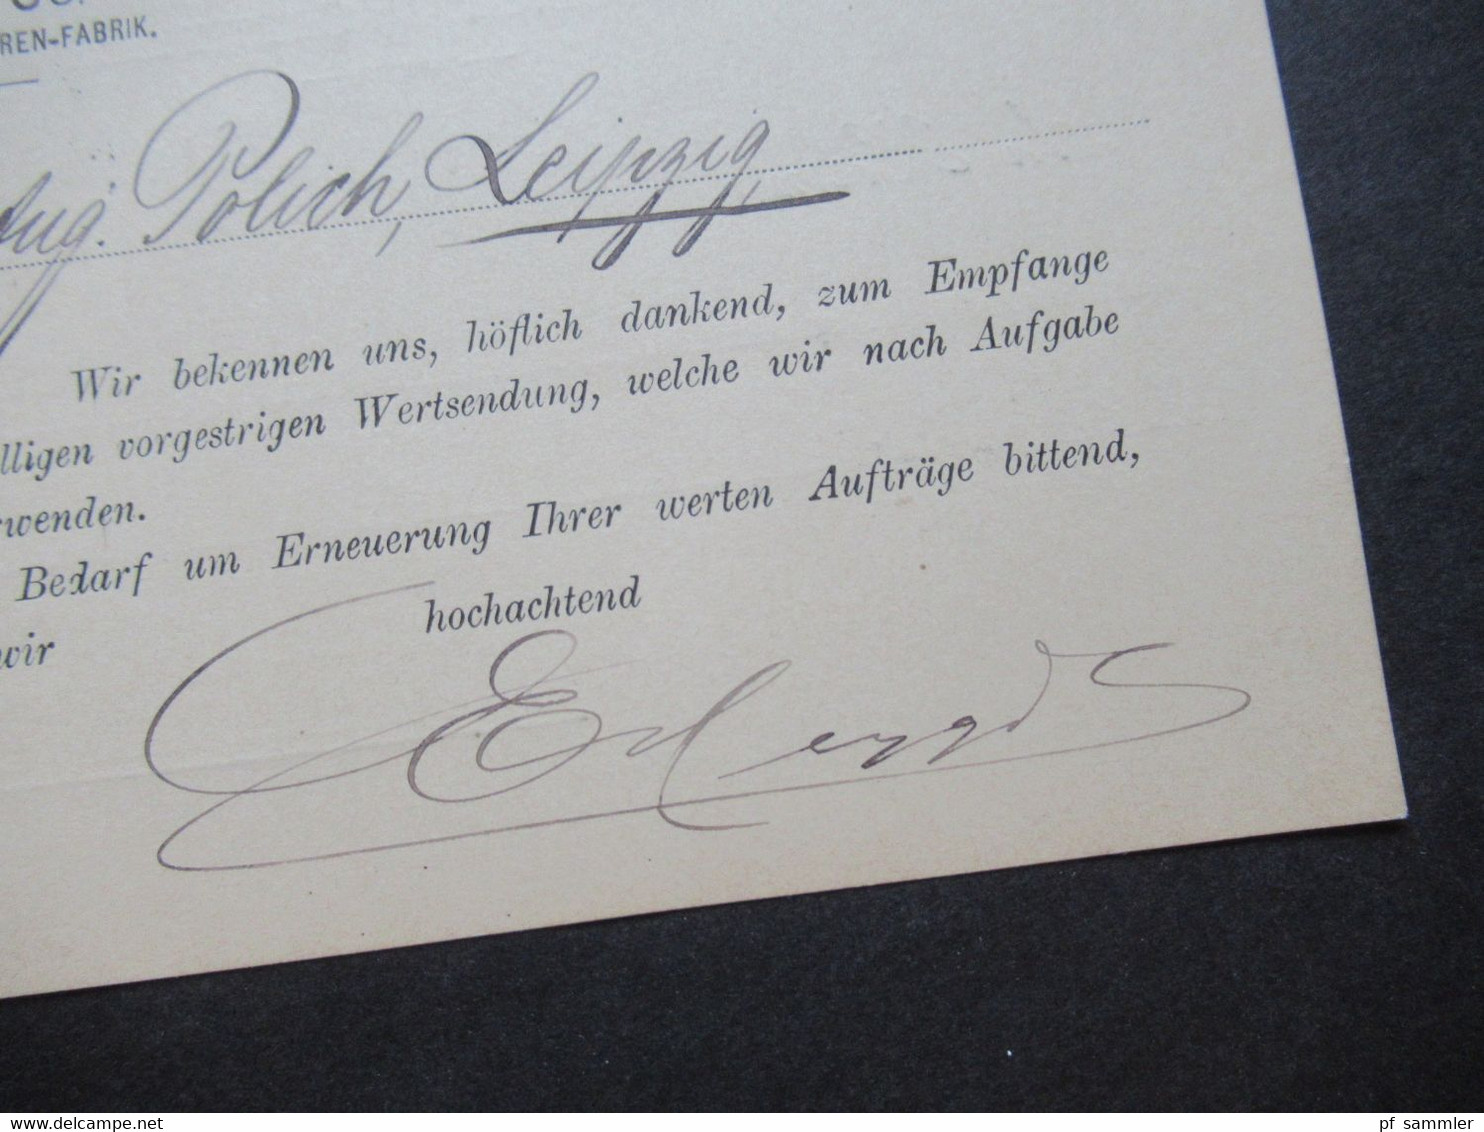 AD Württemberg 1901 Bedruckte PostkarteE. Heyge & Co. Mechanische Tricotwaren Fabrik  Empfang Der Wertsendung - Brieven En Documenten